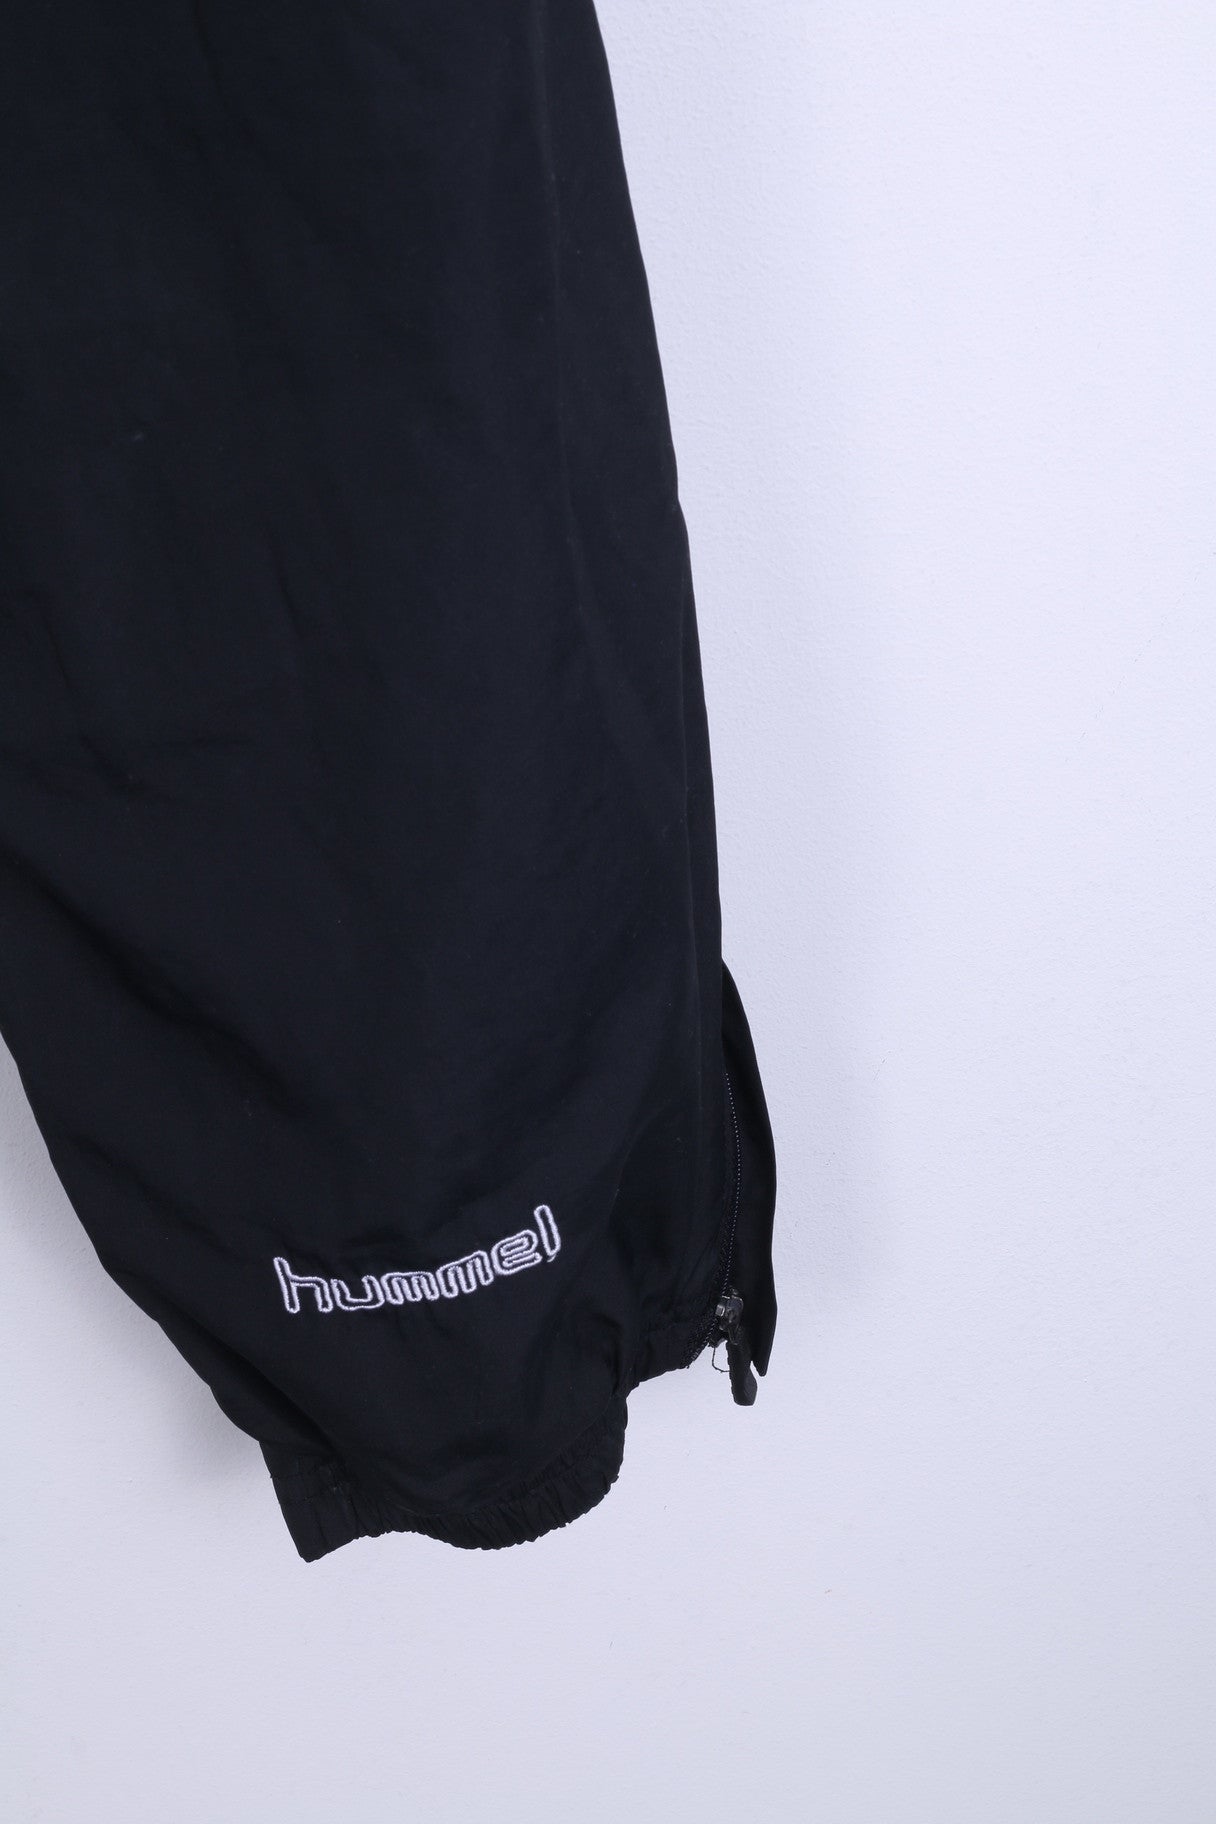 Hummel (Youth 16/176) Mens XS Trousers Black Track Bottom - RetrospectClothes